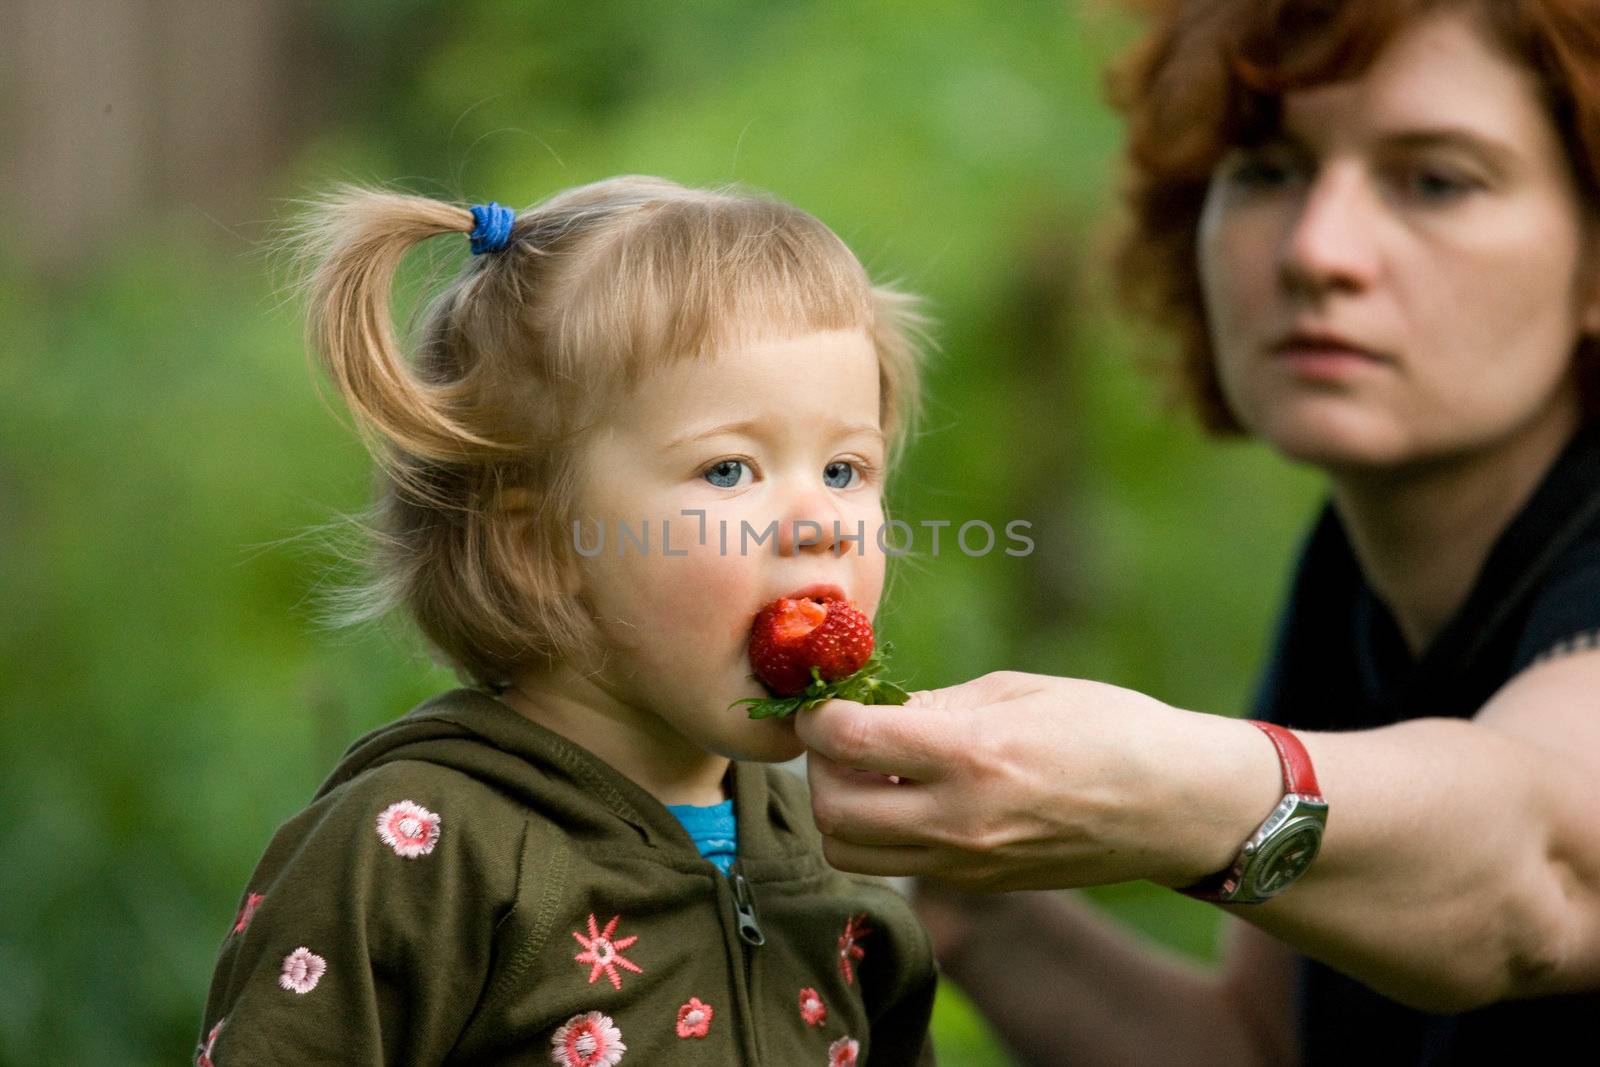 people series: little girl eat ripe strawberries